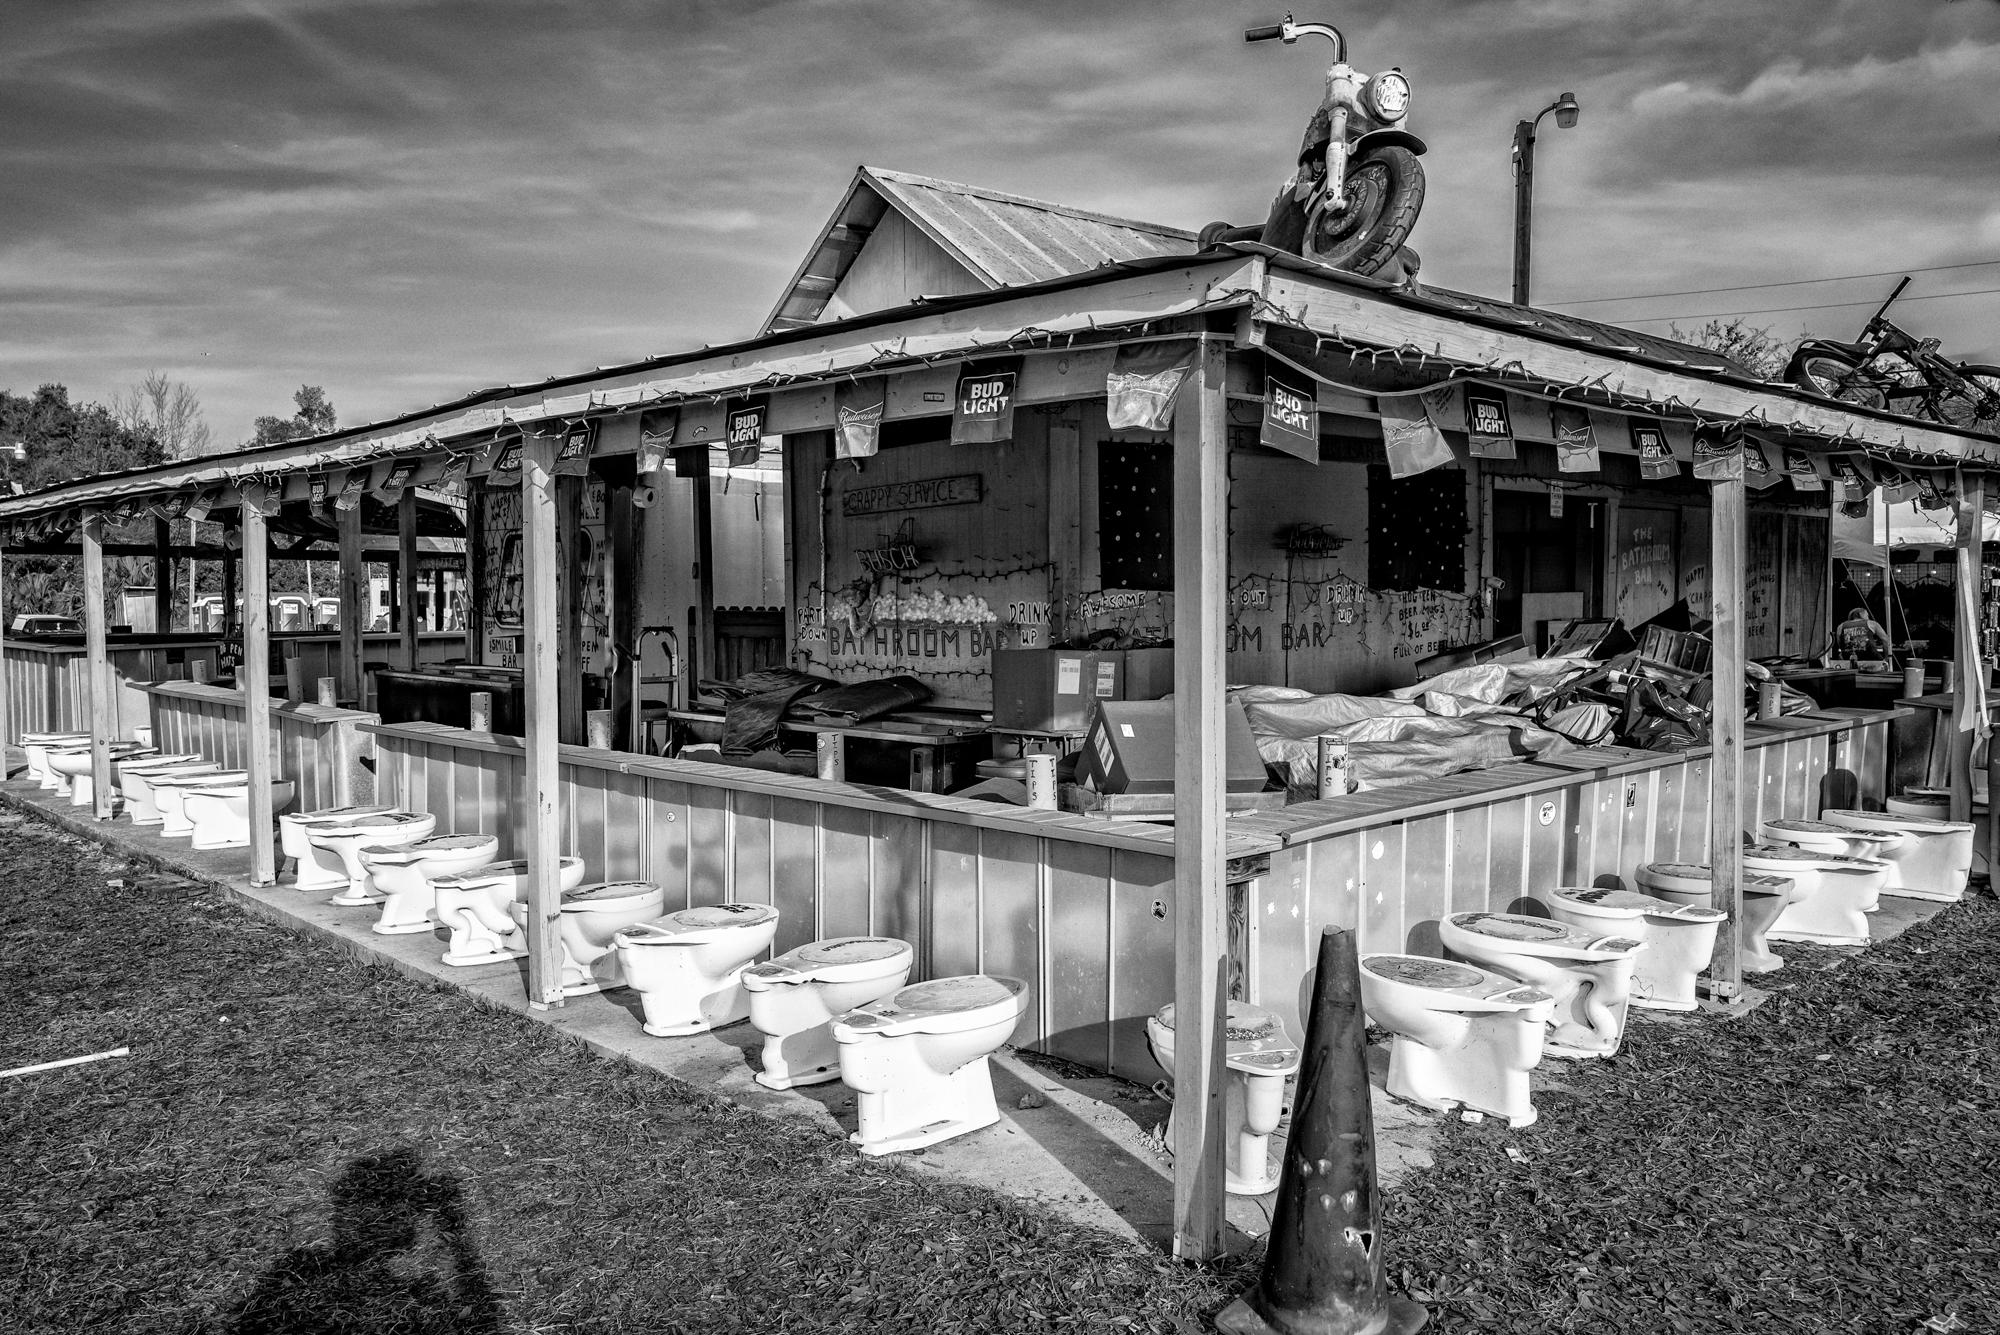 The American Biker - Bathroom Bar, Ormond Beach, FL, 2020